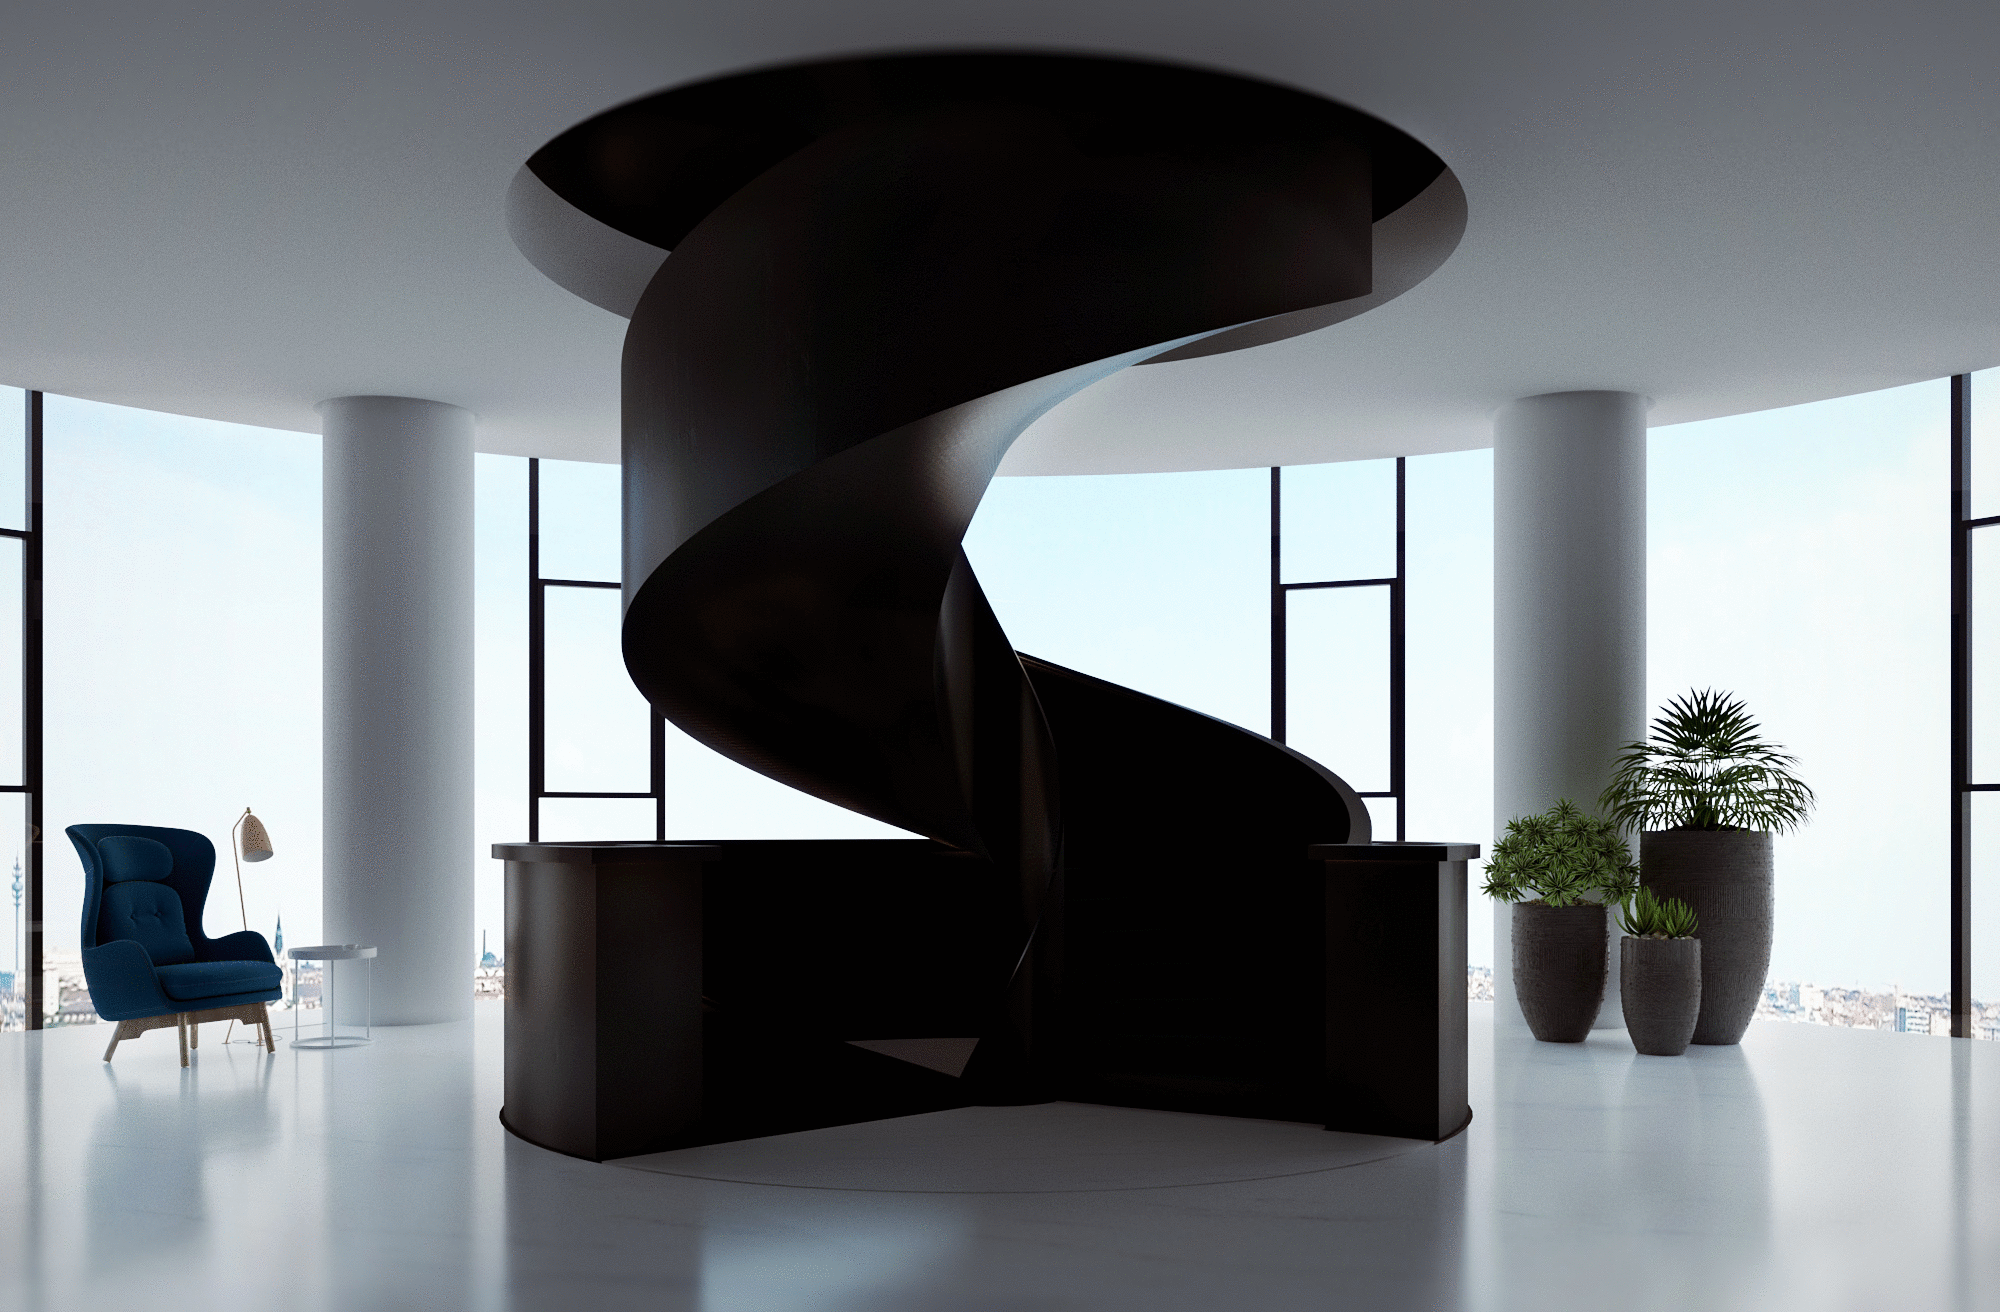 office-stairs |空间|室内设计|lzseven - 原创作品